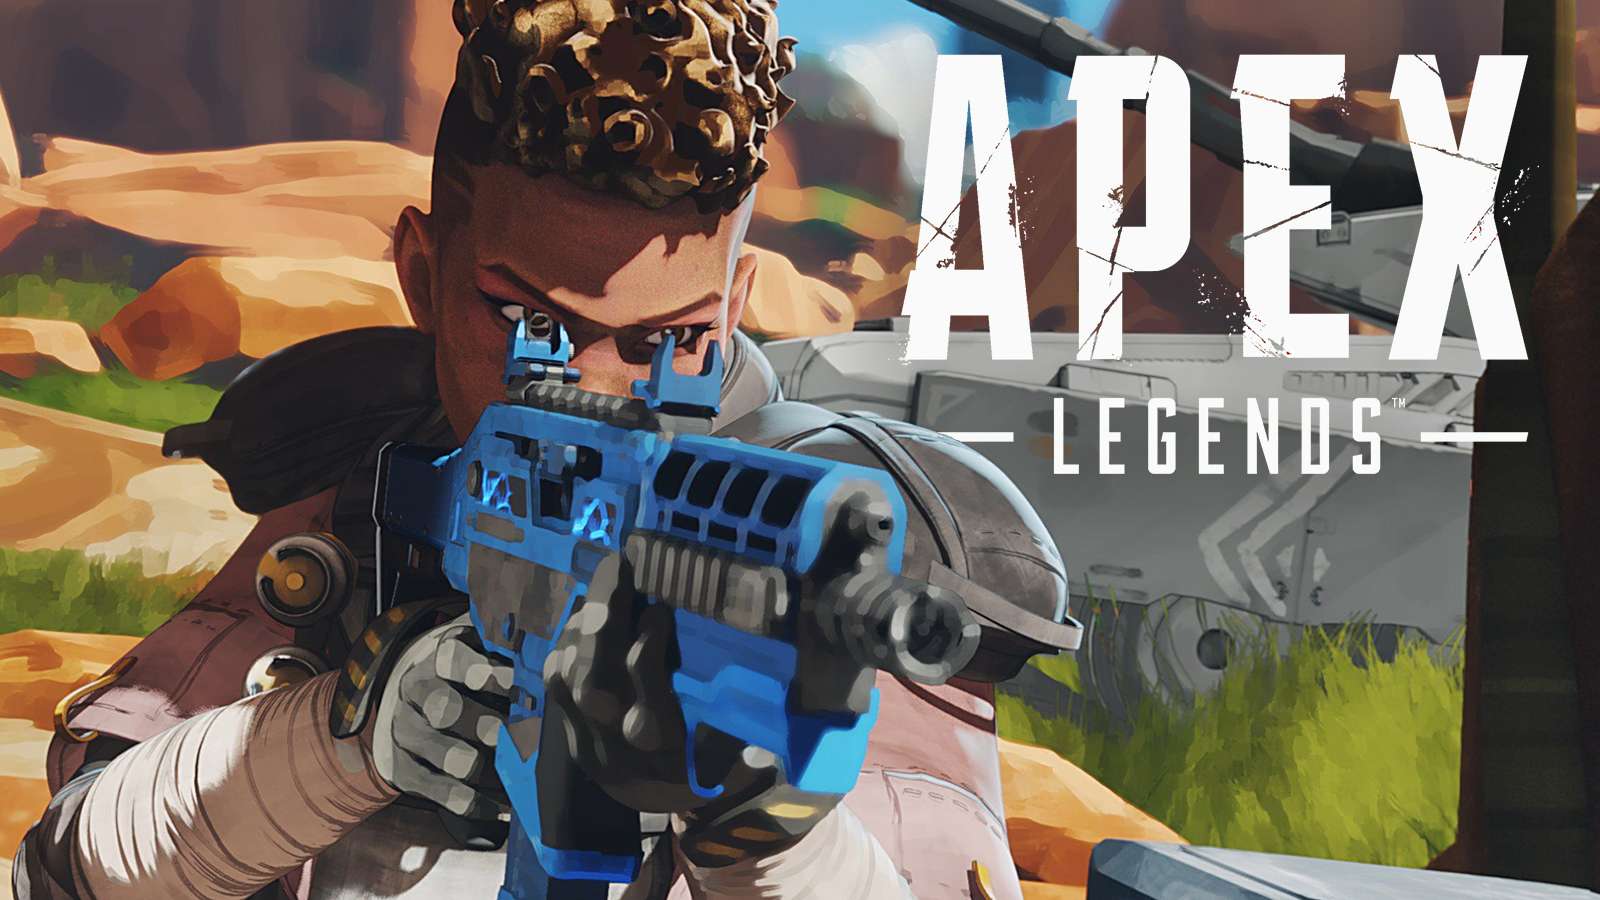 Bangalore shoots a gun in-game Apex Legends damage tracker ticks up.